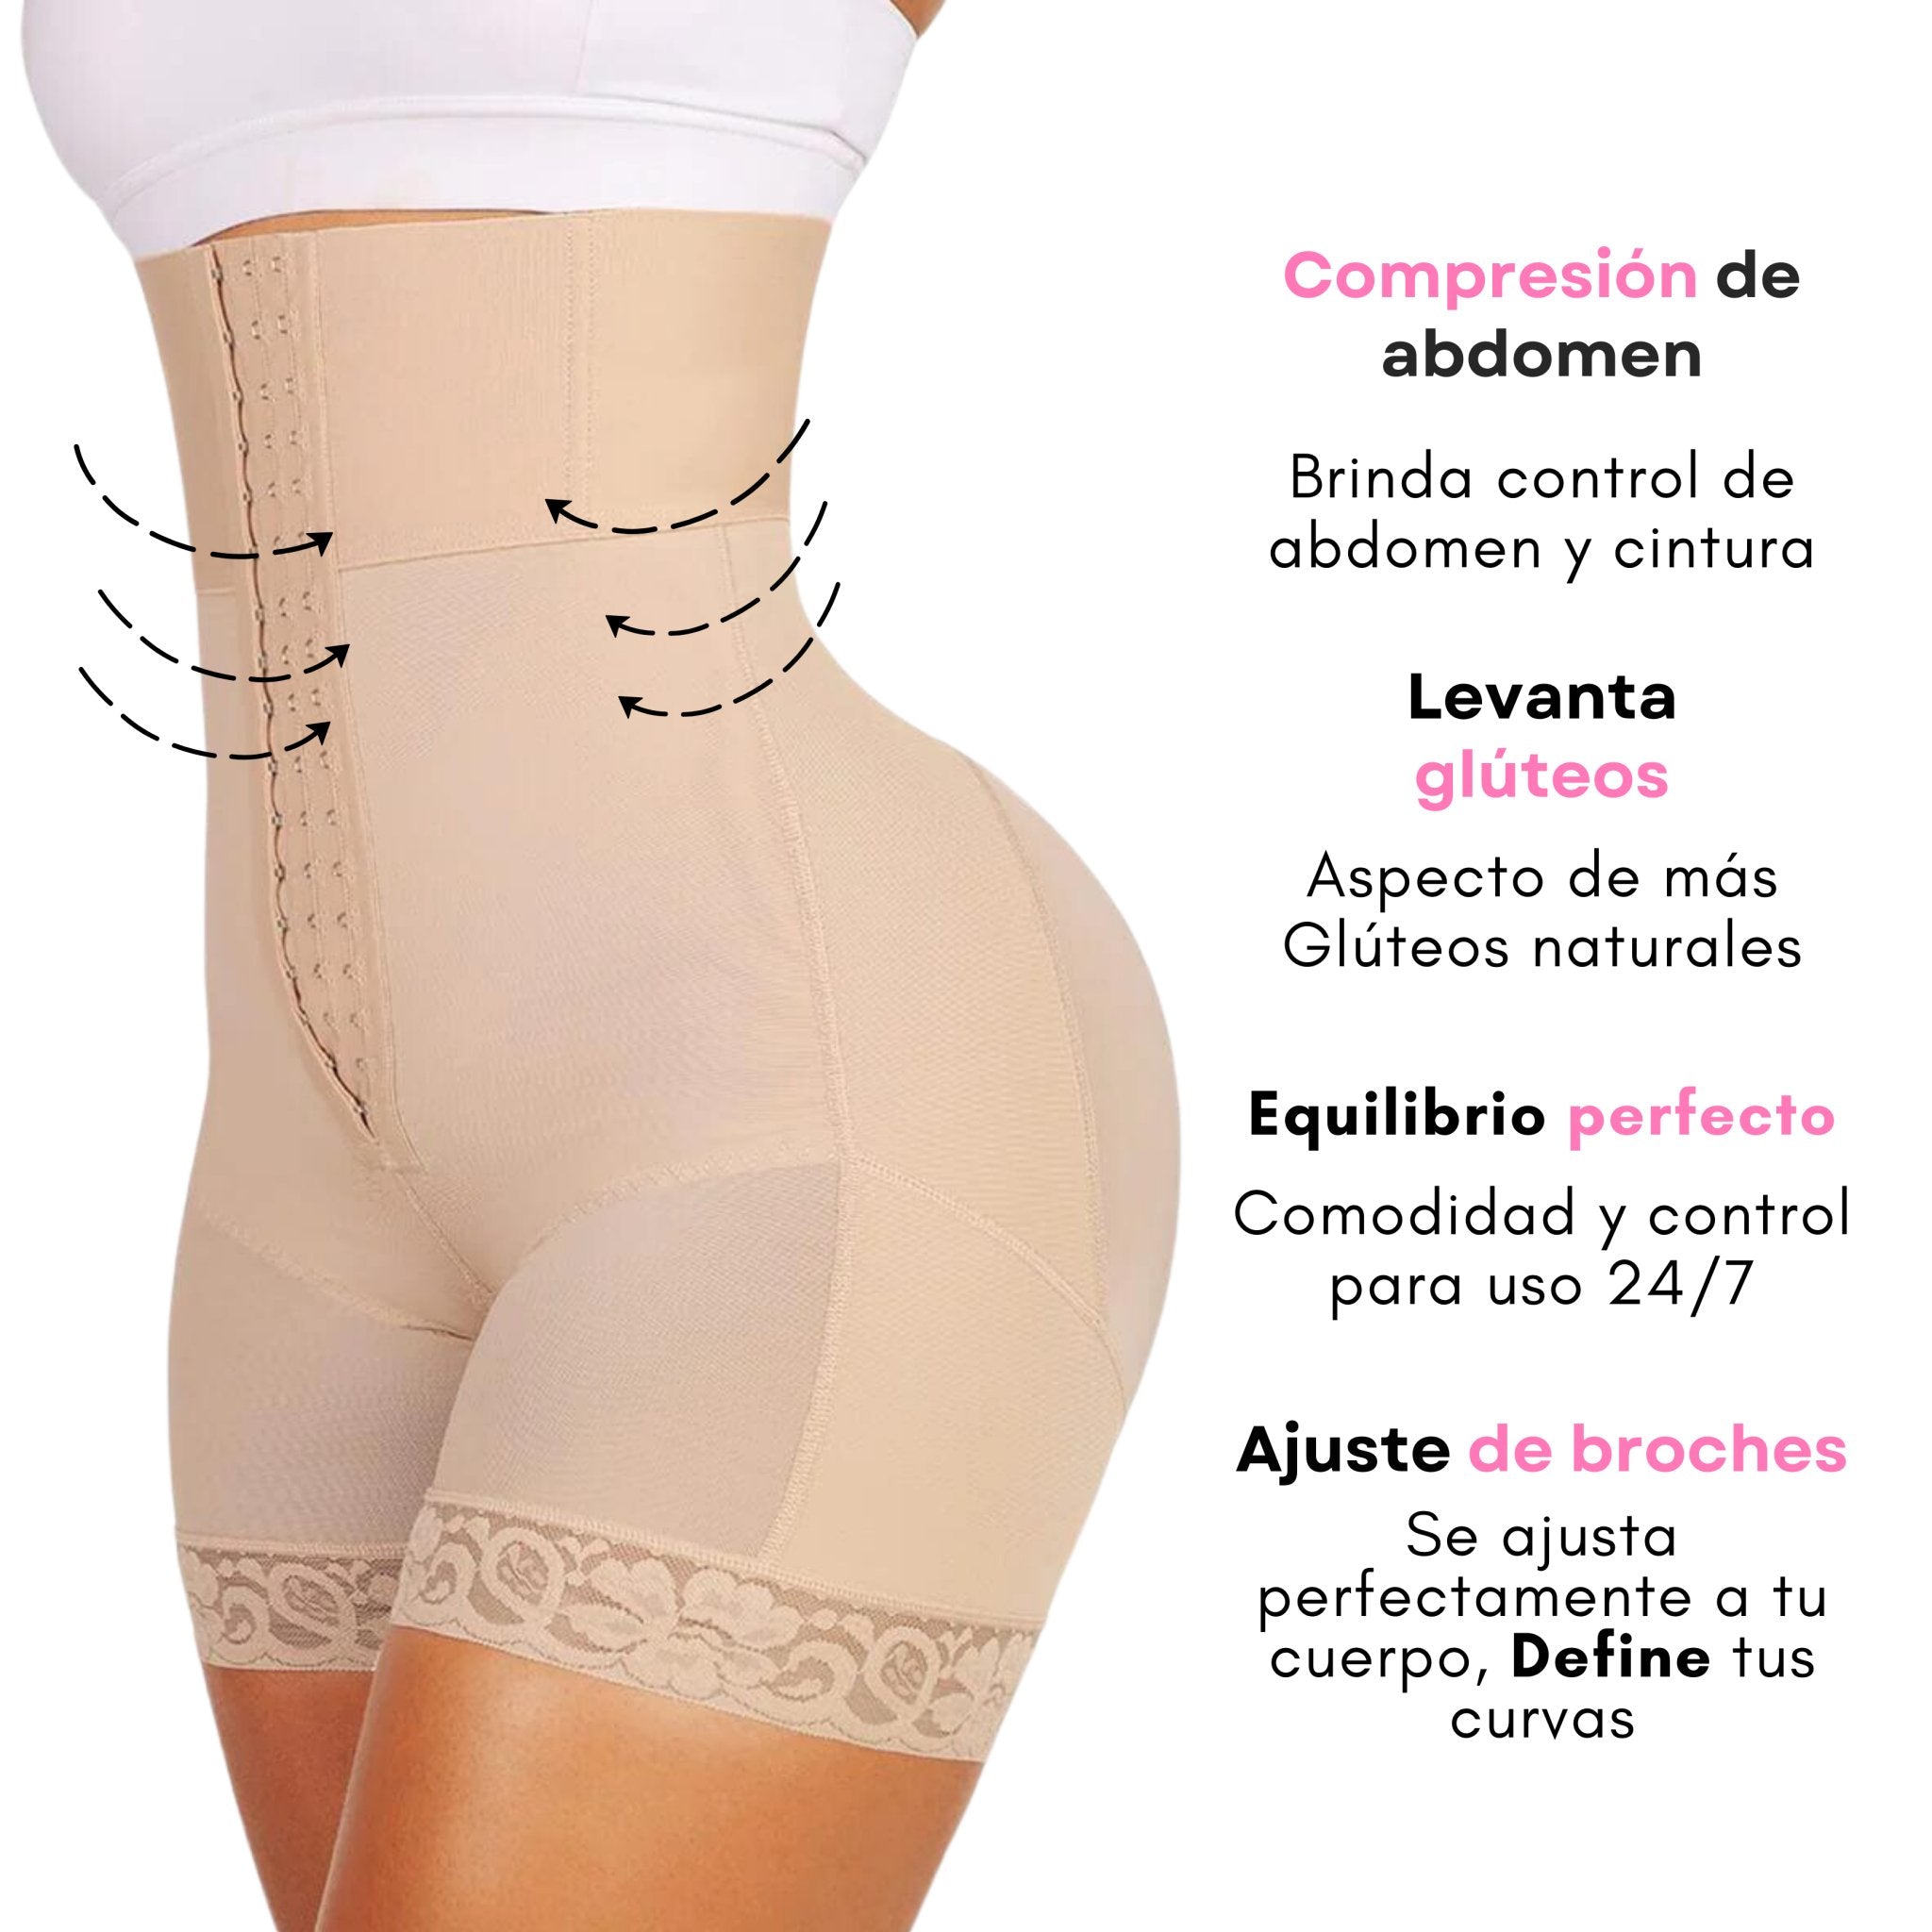 Short Broche - Sticky Bra #brasier_sin_espalda# #brasier_para_escotes# #brasier_para_vestido# #brasier_strapless# #brasier_adhesivo# #brasier_adherente# #brasier_de_silicon# #brasier_escot